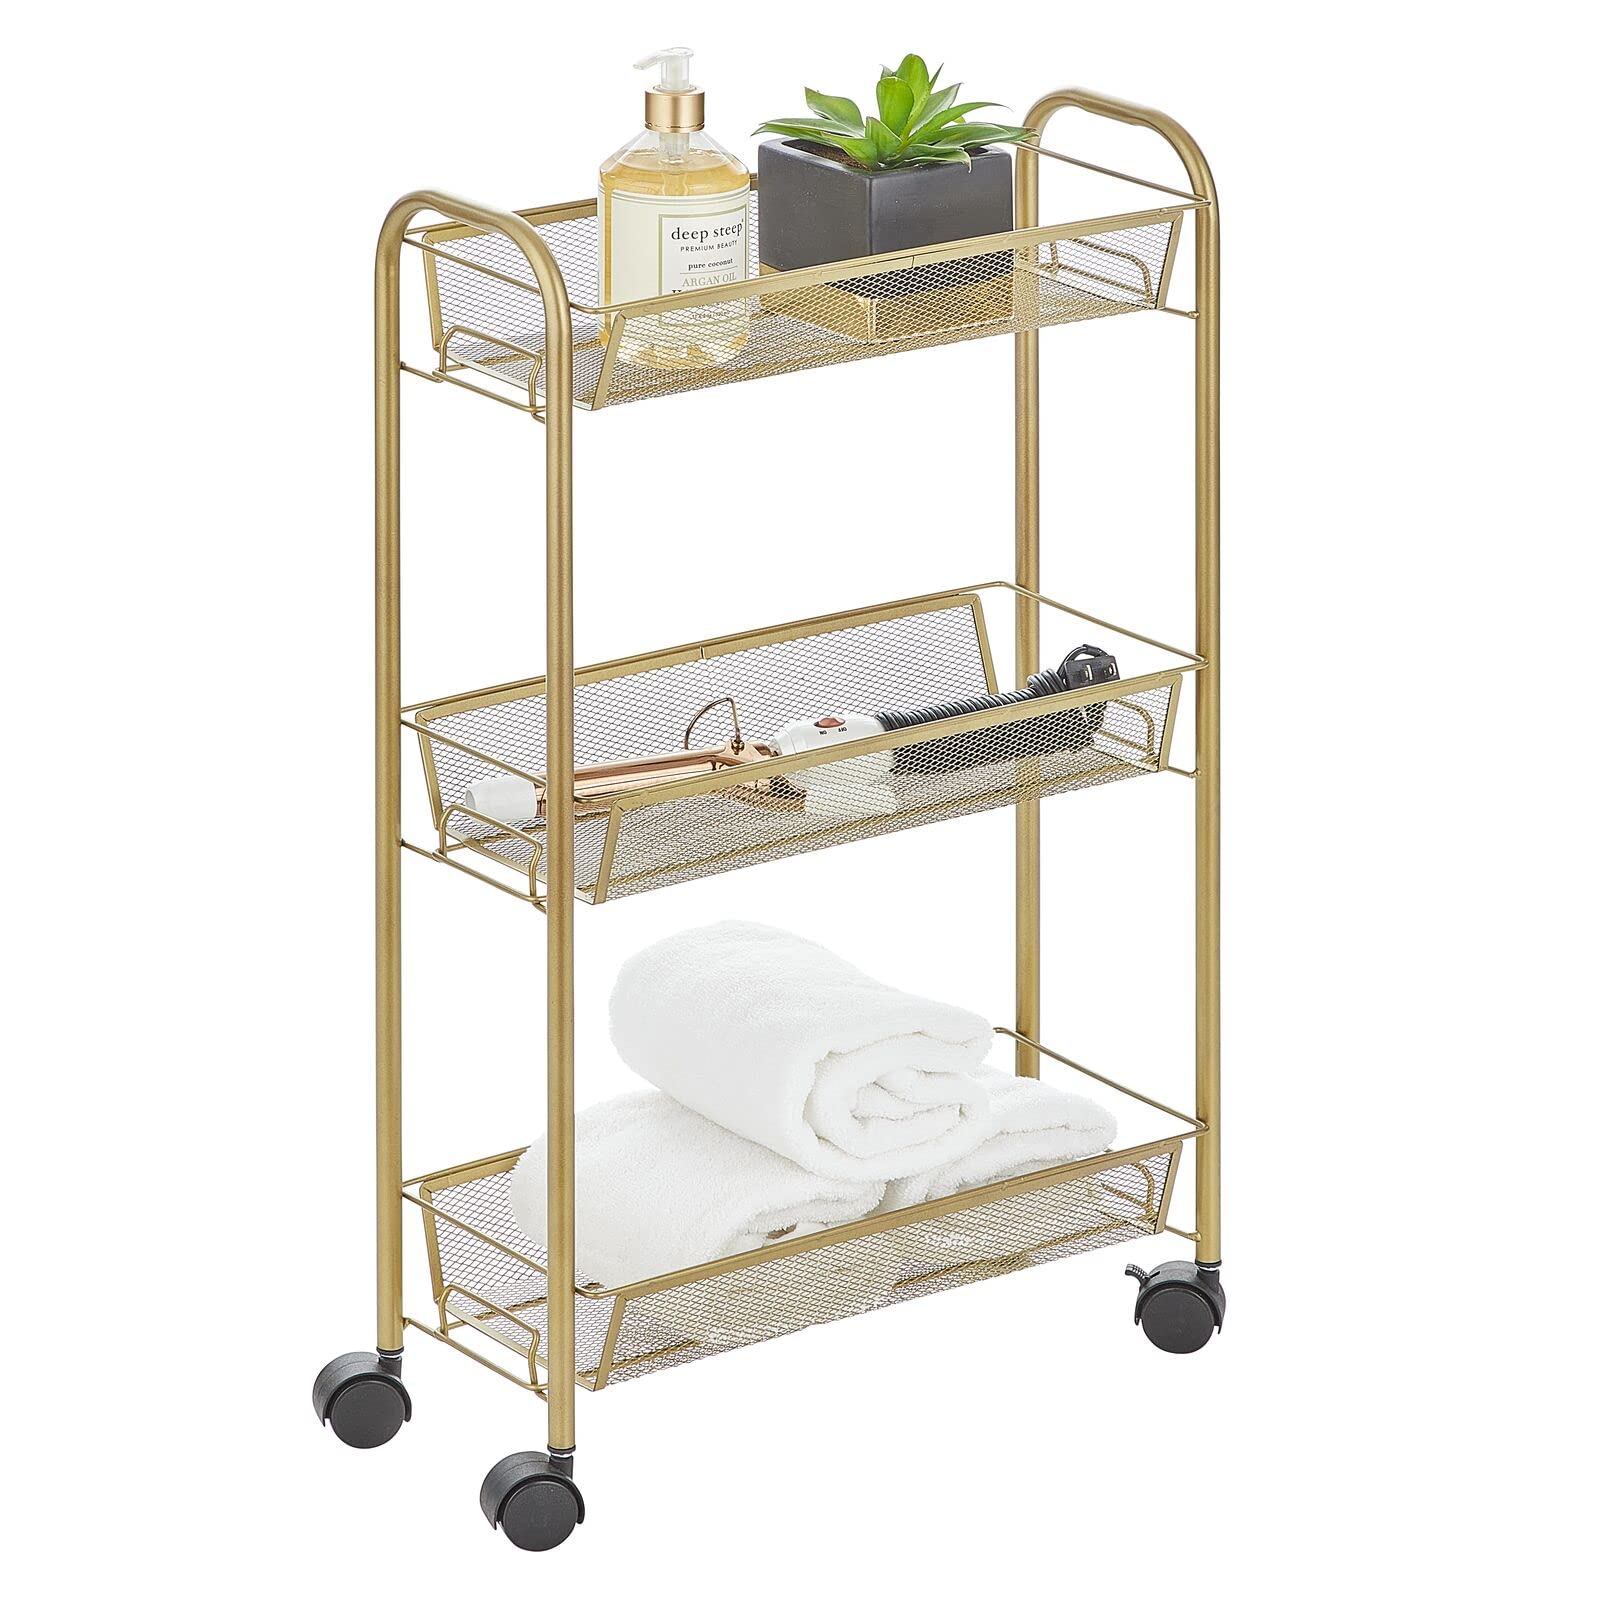 Mdesign Steel Rolling Utility Cart Storage Organizer Trolley With 3 Basket Shelves For Laundry Room, Mudroom, Garage, Bathroom O